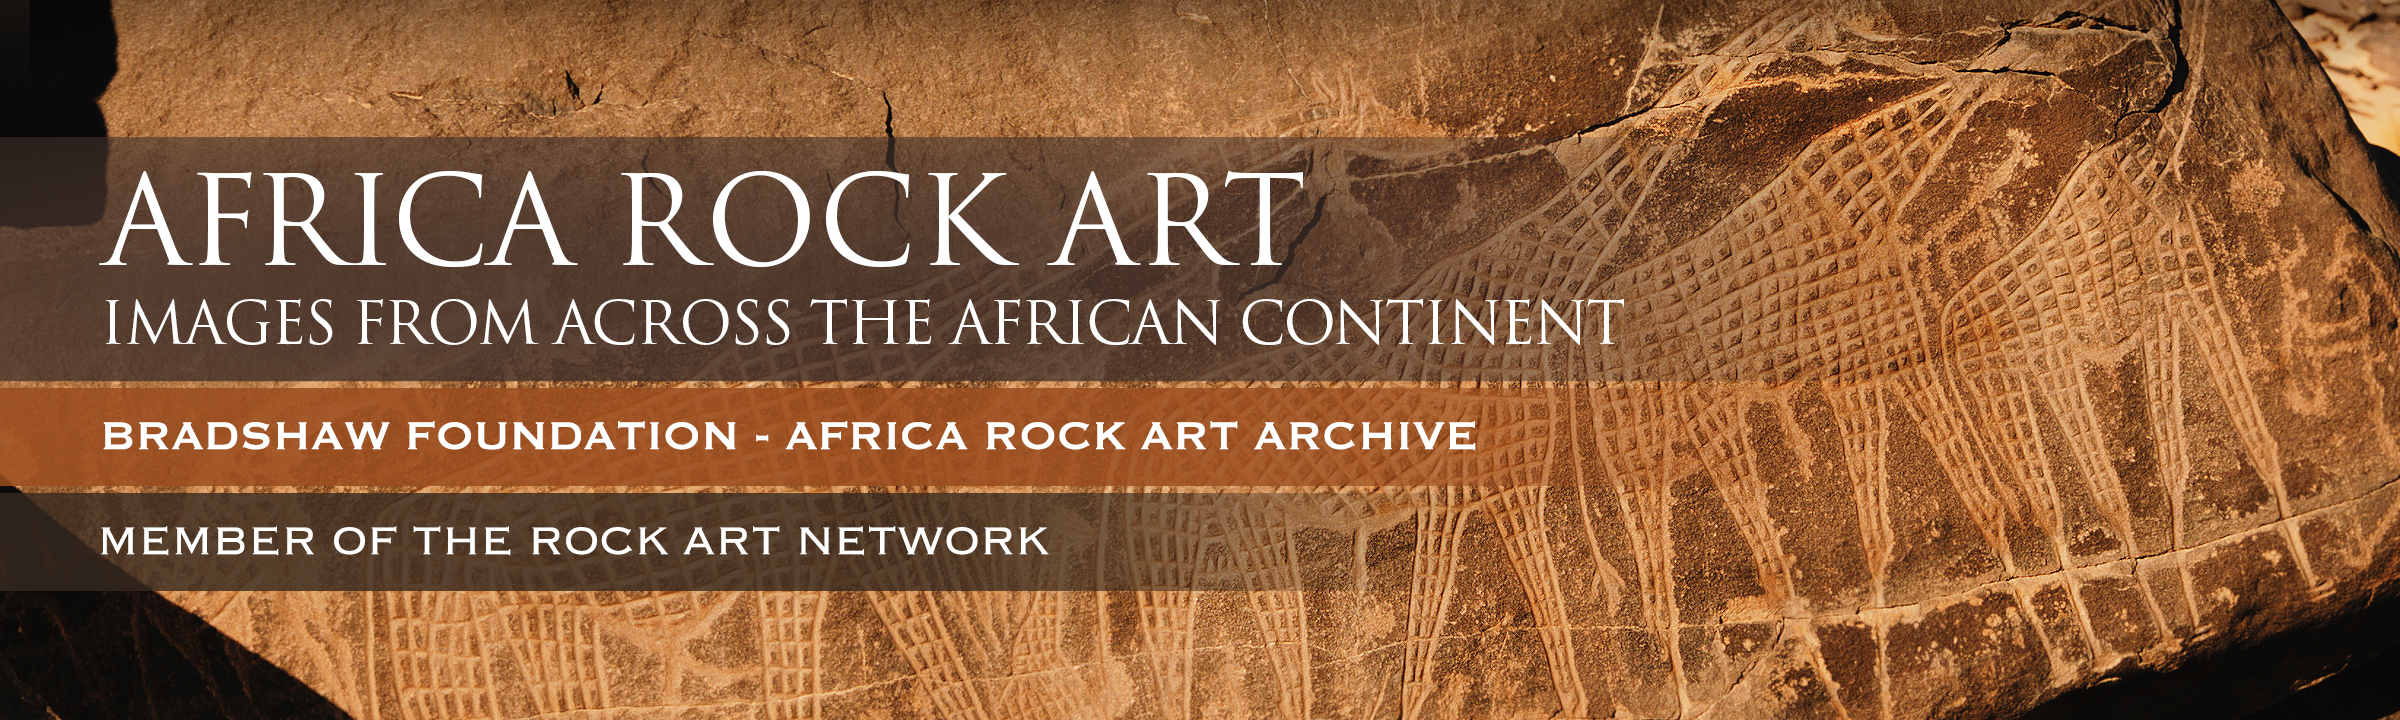 Batwa Africa Africa Rock Art Bradshaw Foundation